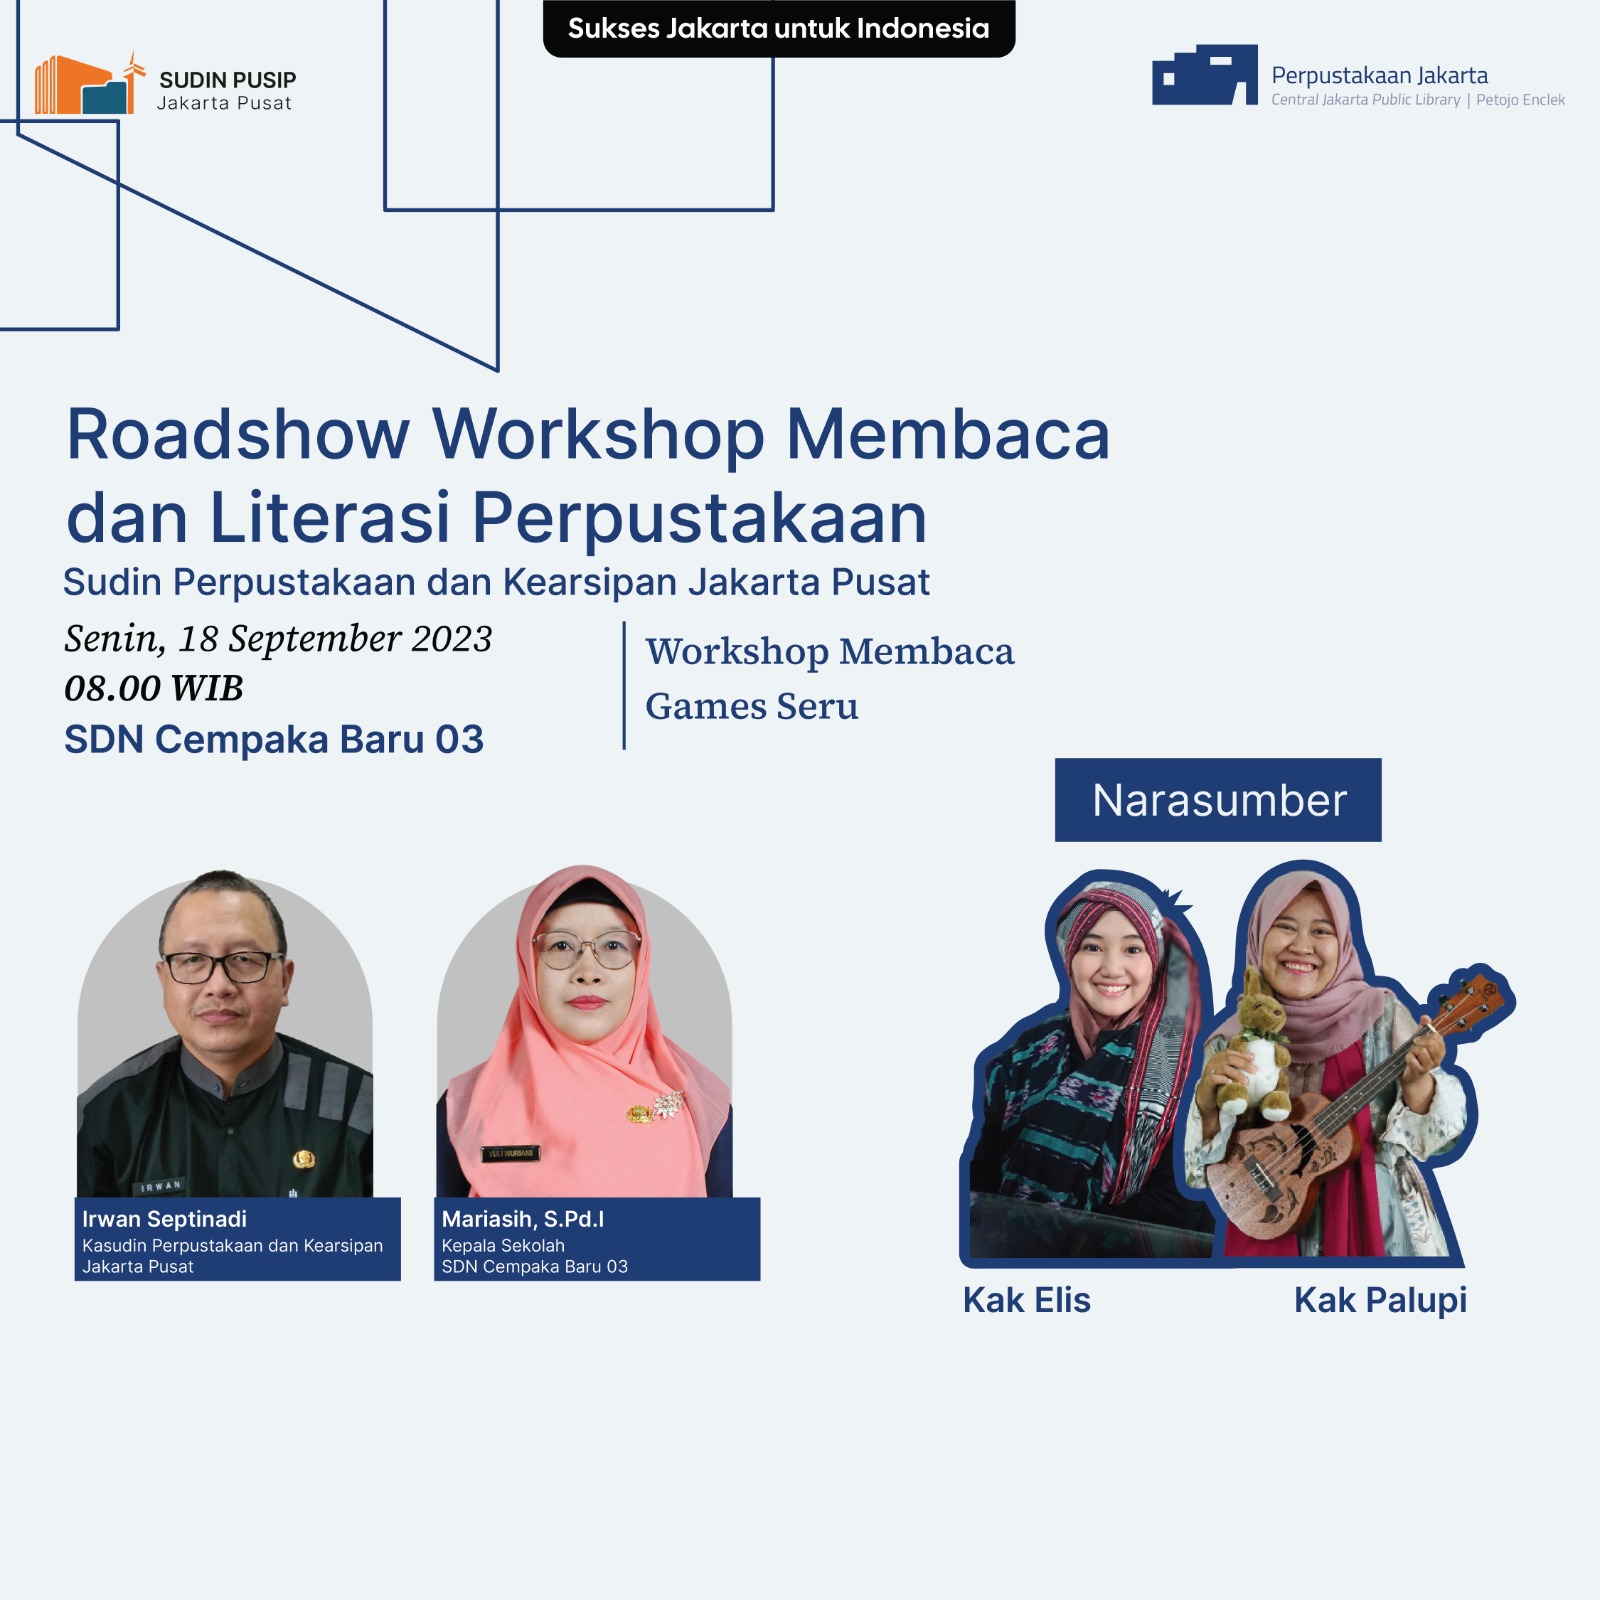 Roadshow Workshop Membaca Dan Literasi Perpustakaan Sudin Pusip Jakarta Pusat Di SDN Cempaka Baru 03